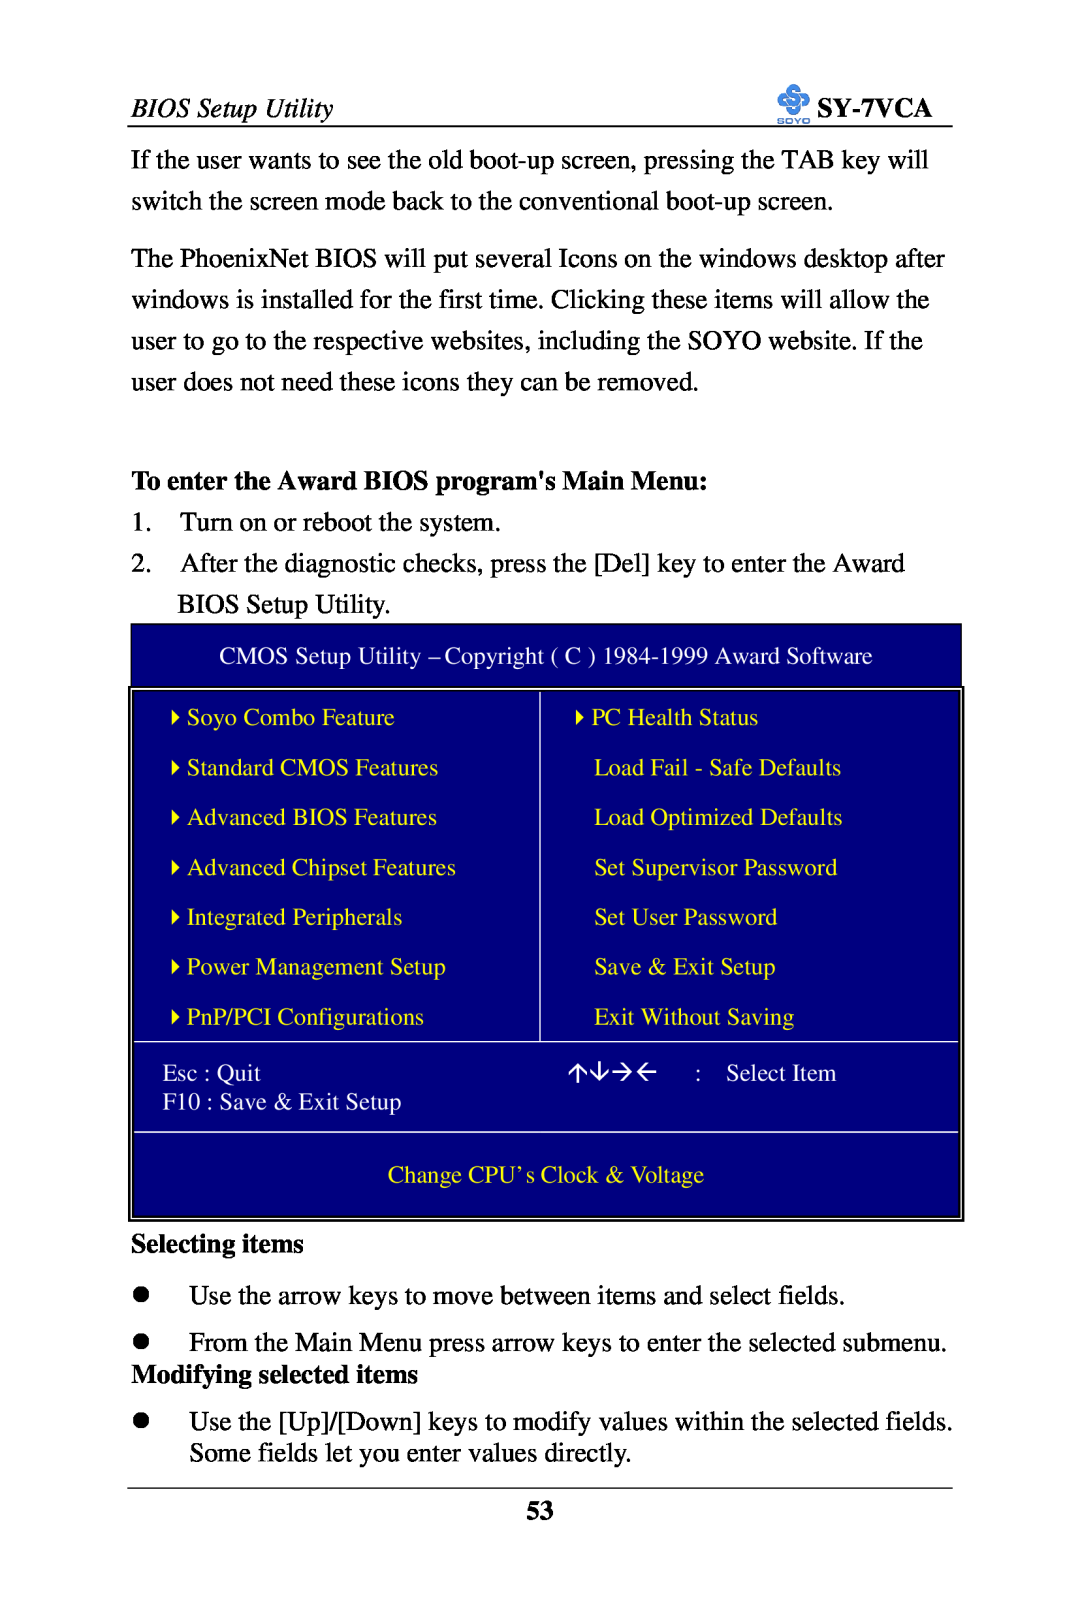 SOYO SY-7VCA user manual To enter the Award BIOS programs Main Menu, Selecting items, Modifying selected items 